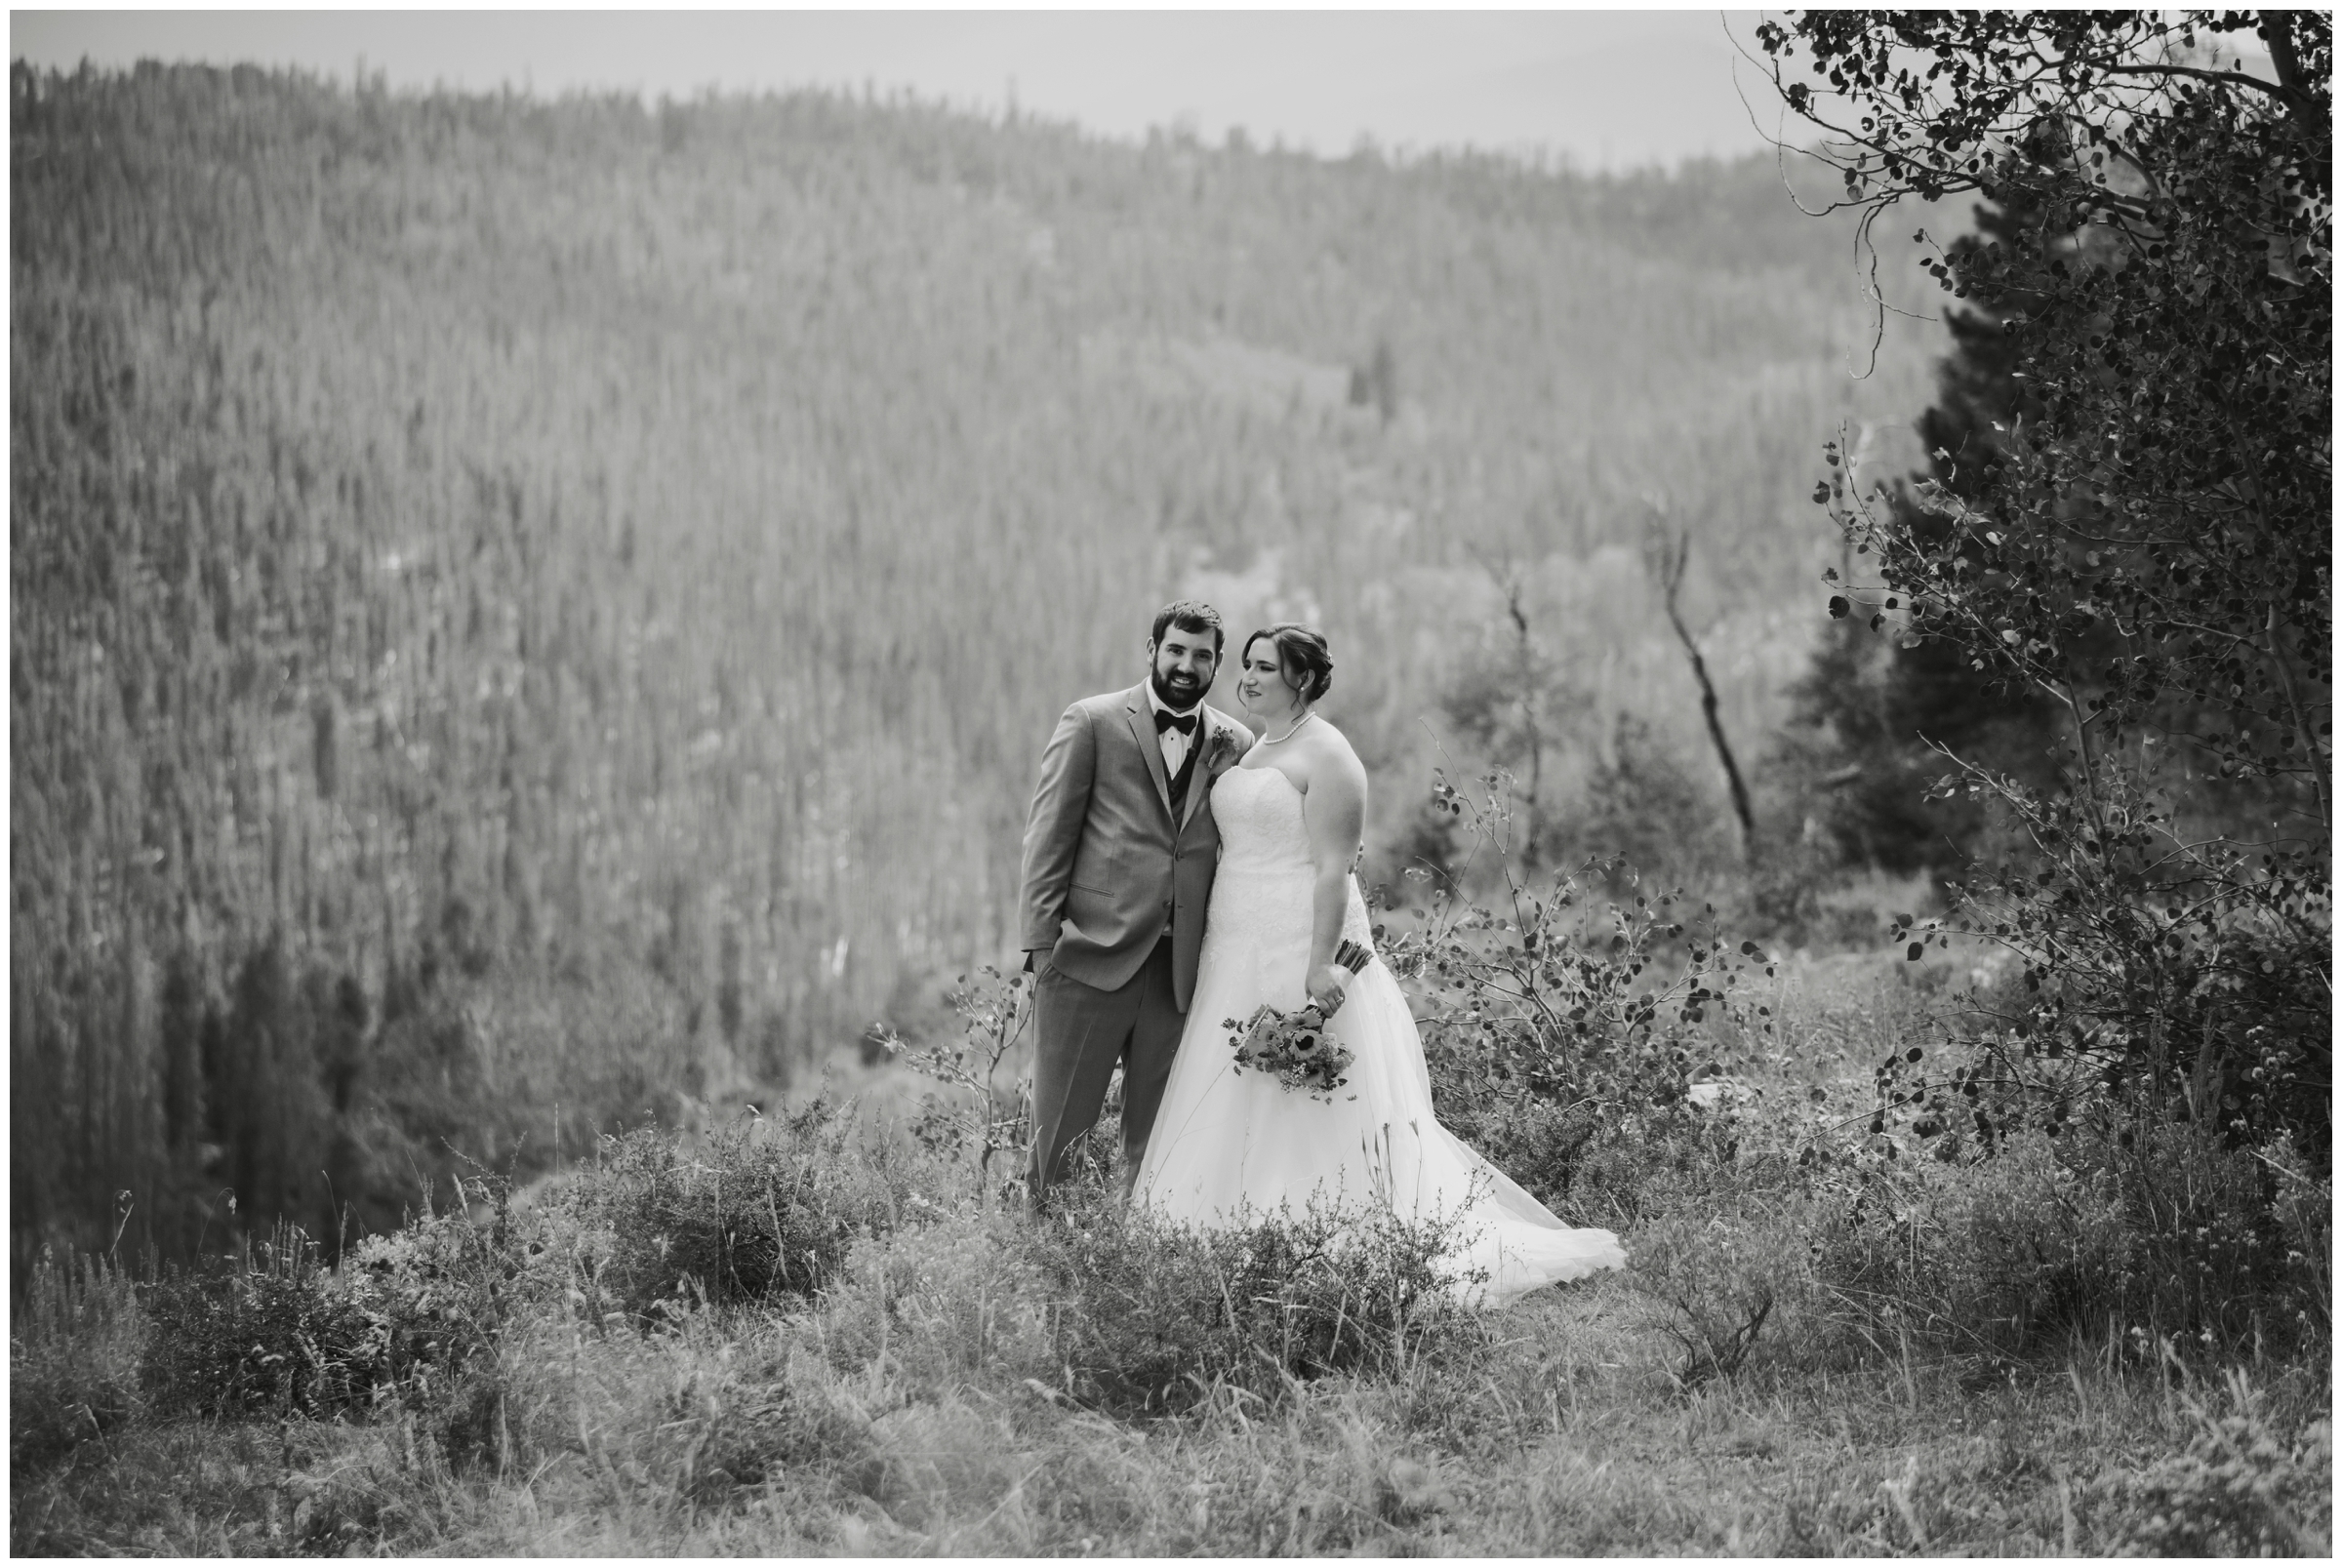 Fall Granby Ranch wedding photos by Colorado mountain photographer Plum Pretty Photography. Winter Park ski themed wedding inspiration.